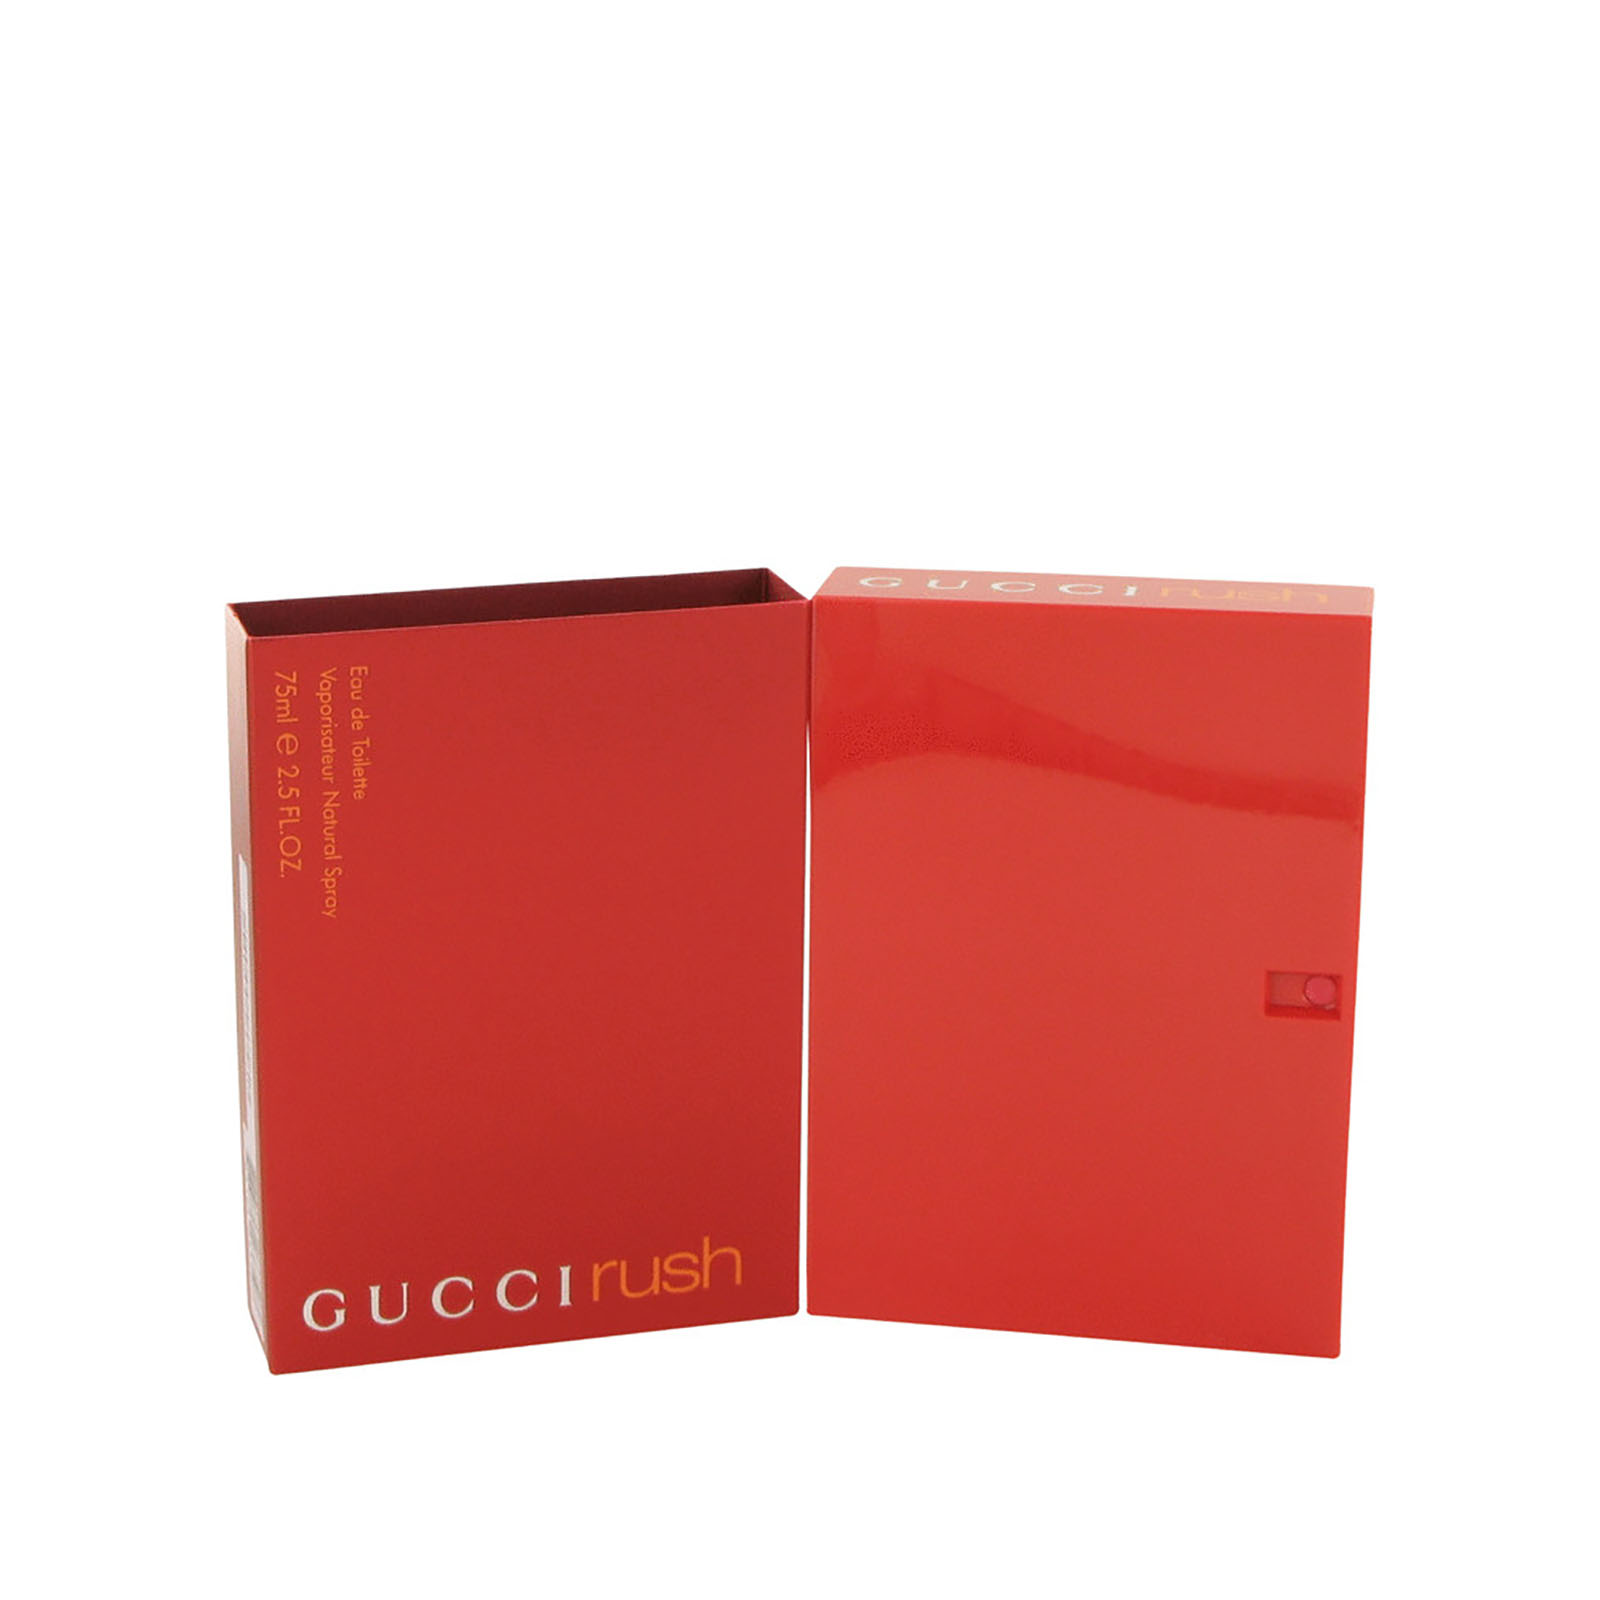 Gucci Rush 2.5oz. Perfume for Women